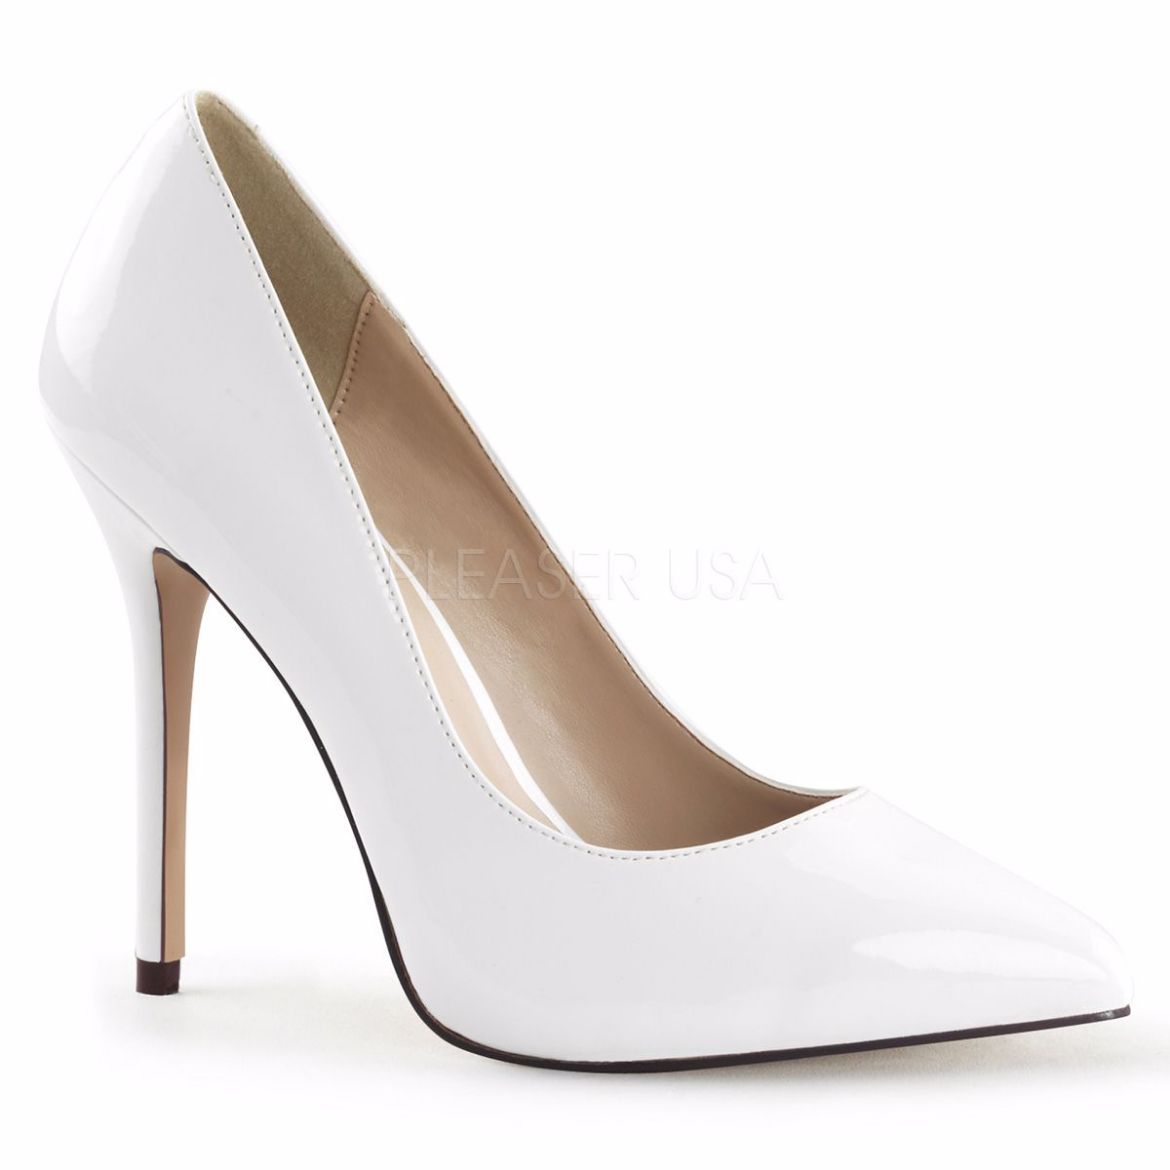 Product image of Pleaser Amuse-20 White Patent, 5 inch (12.7 cm) Heel, 3/8 inch (1 cm) Hidden Platform Court Pump Shoes